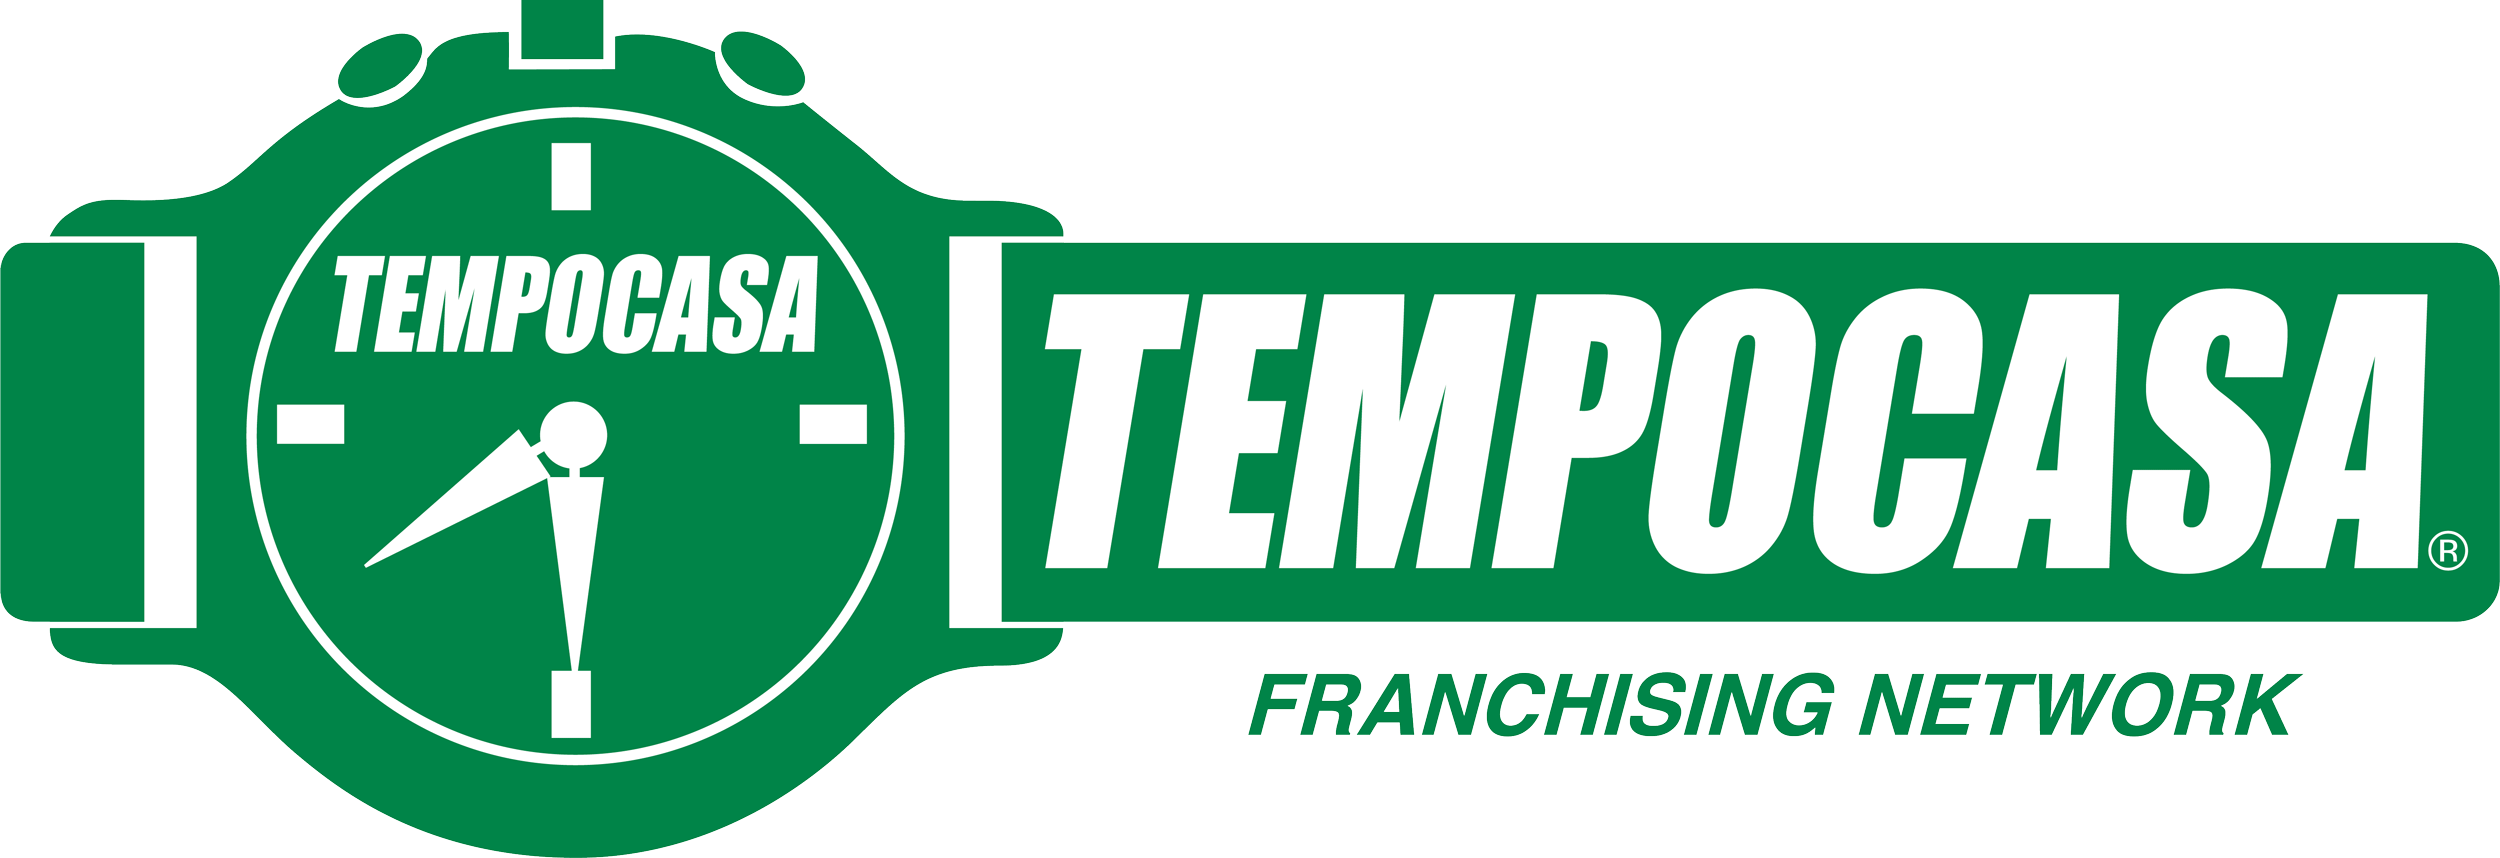 Ospitaletto - Tempocasa